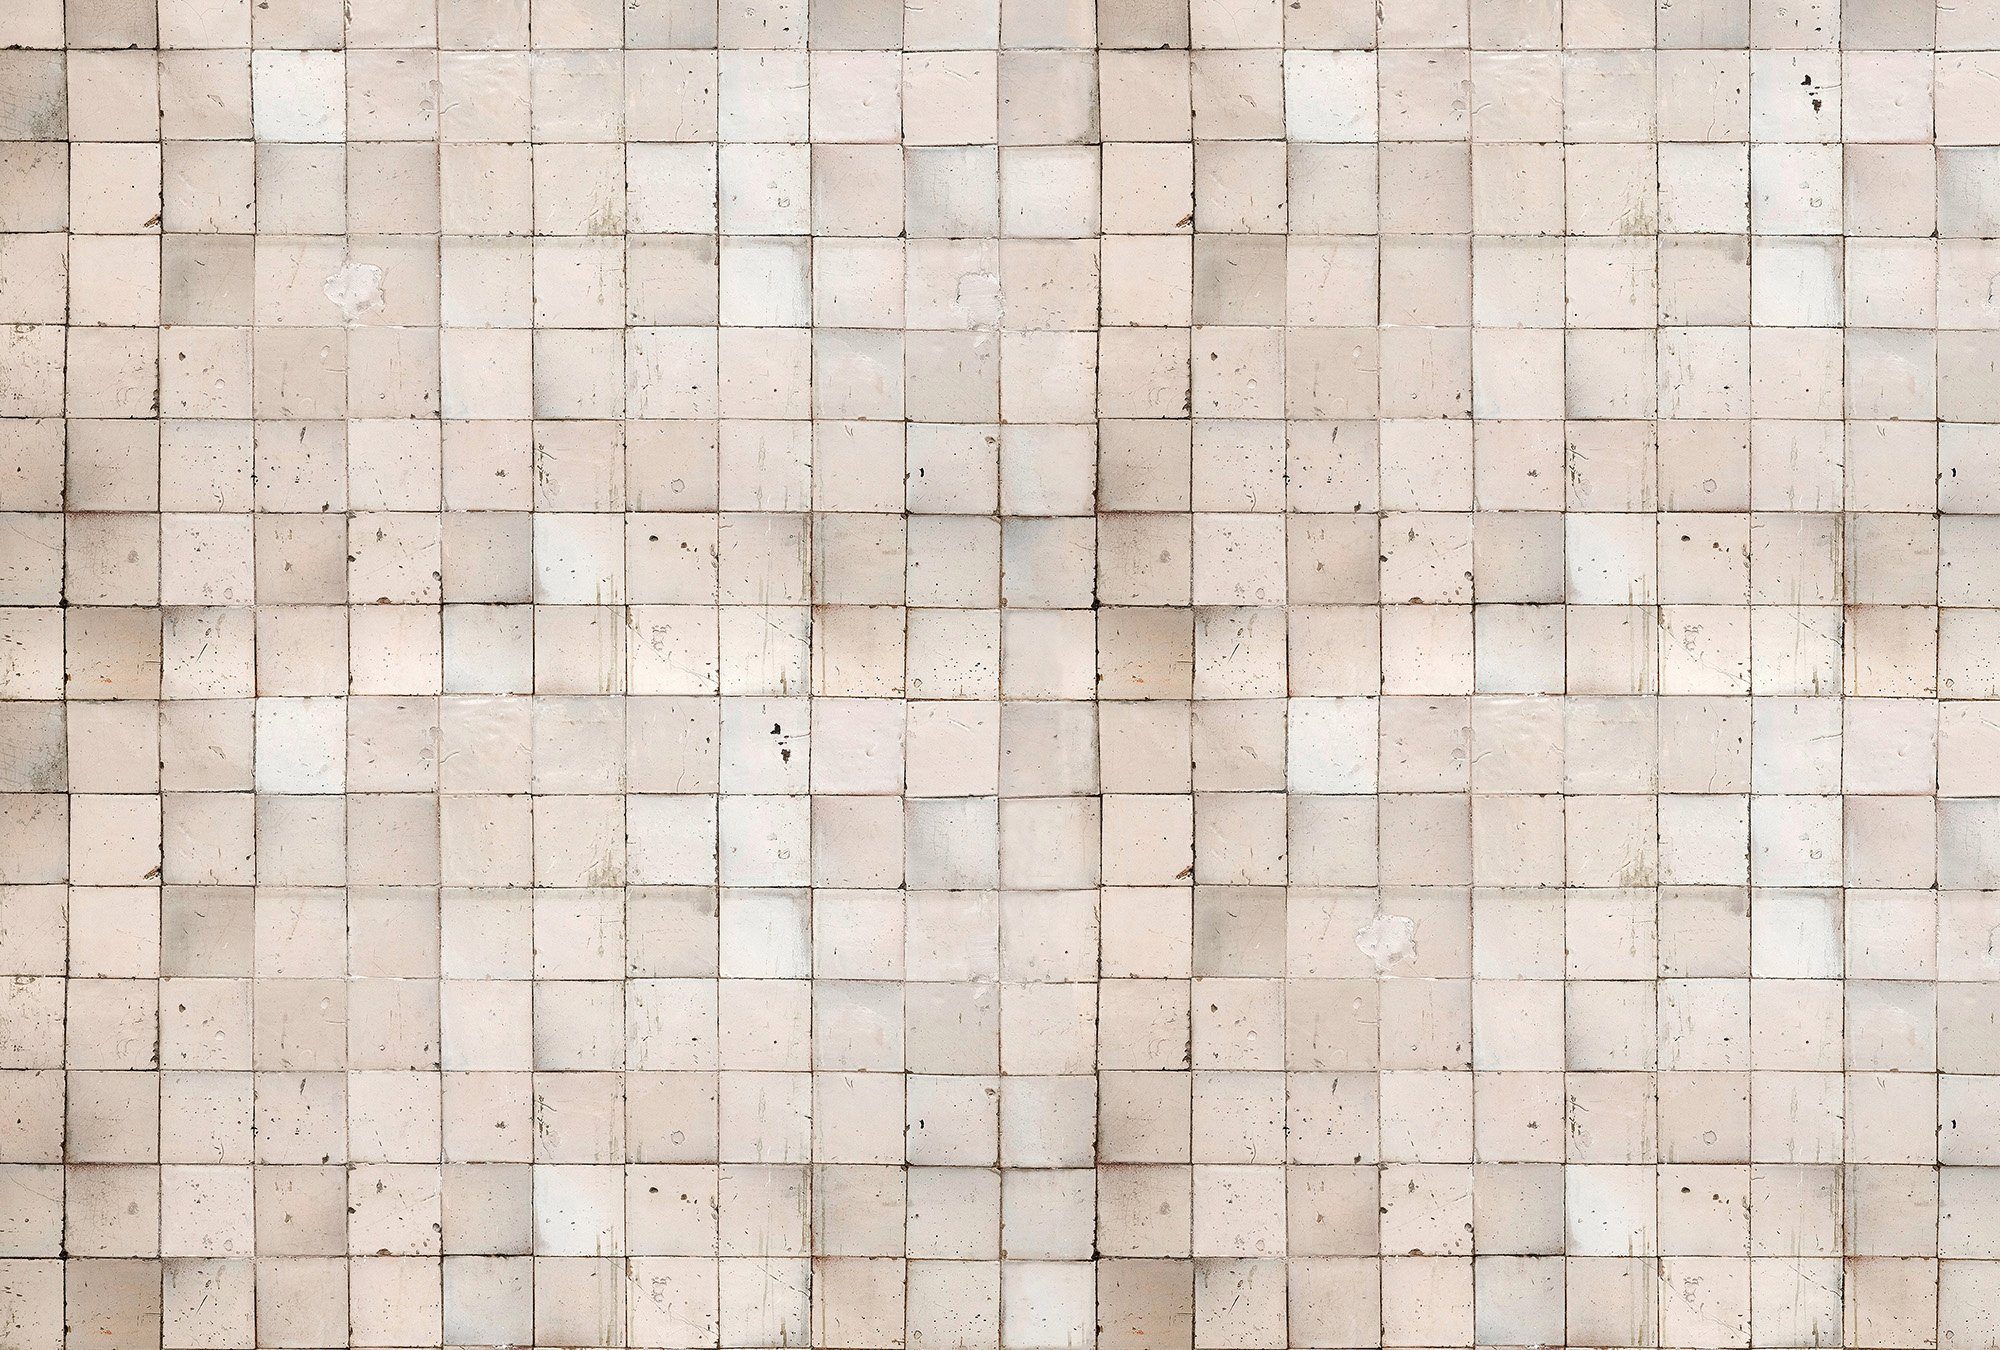 Architects Paper Fototapete Old Tiles White, (Set, 4 St), Vlies, Wand, Schräge